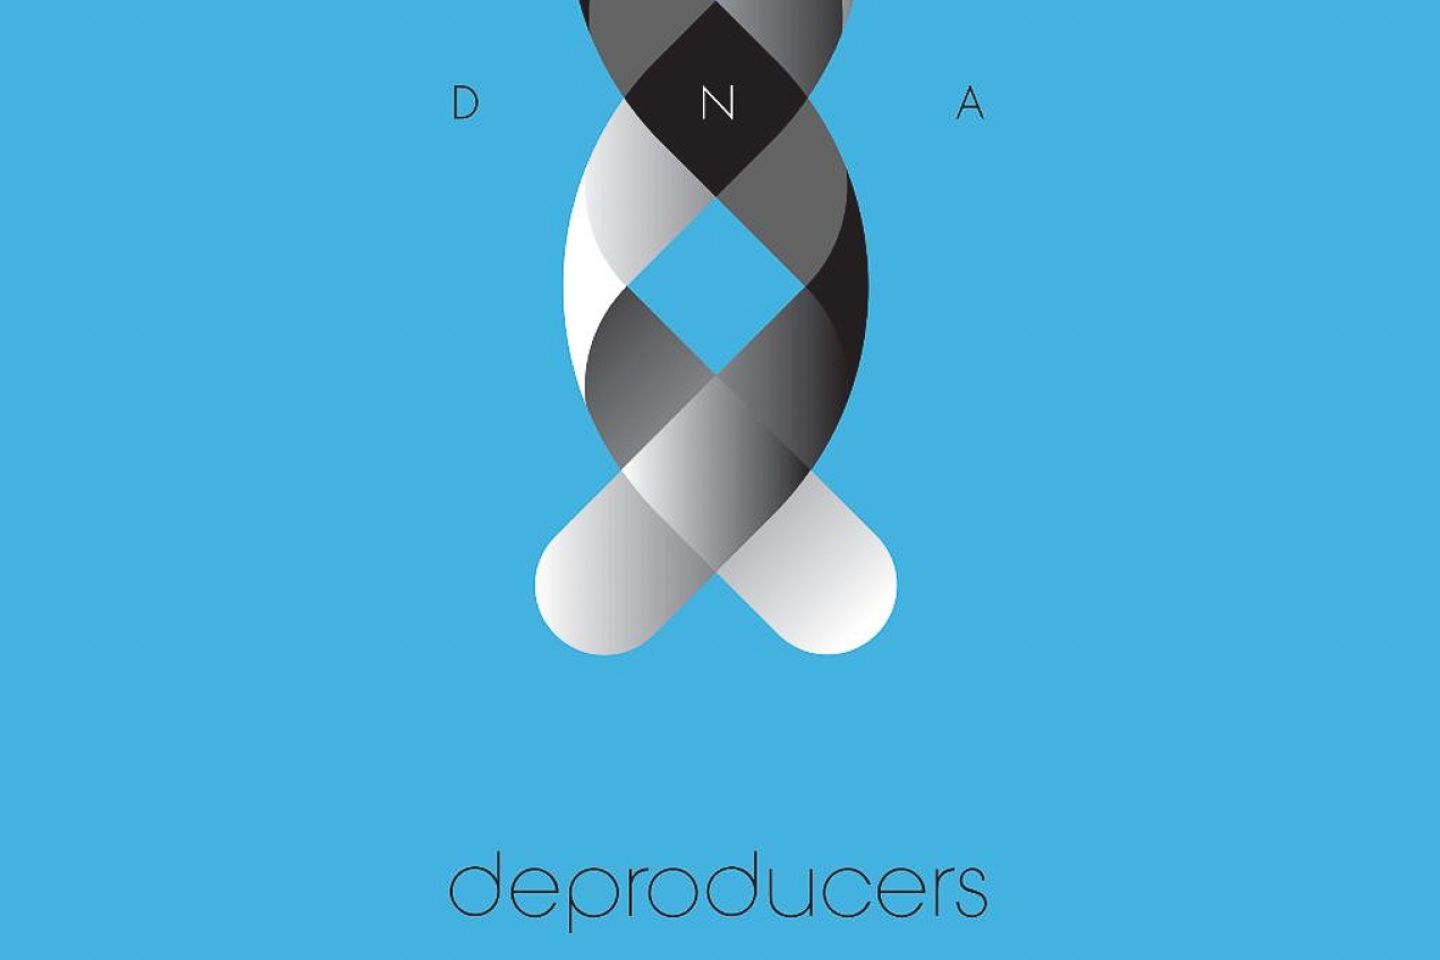 Deproducers “DNA” (Ala Bianca Records, 2019)